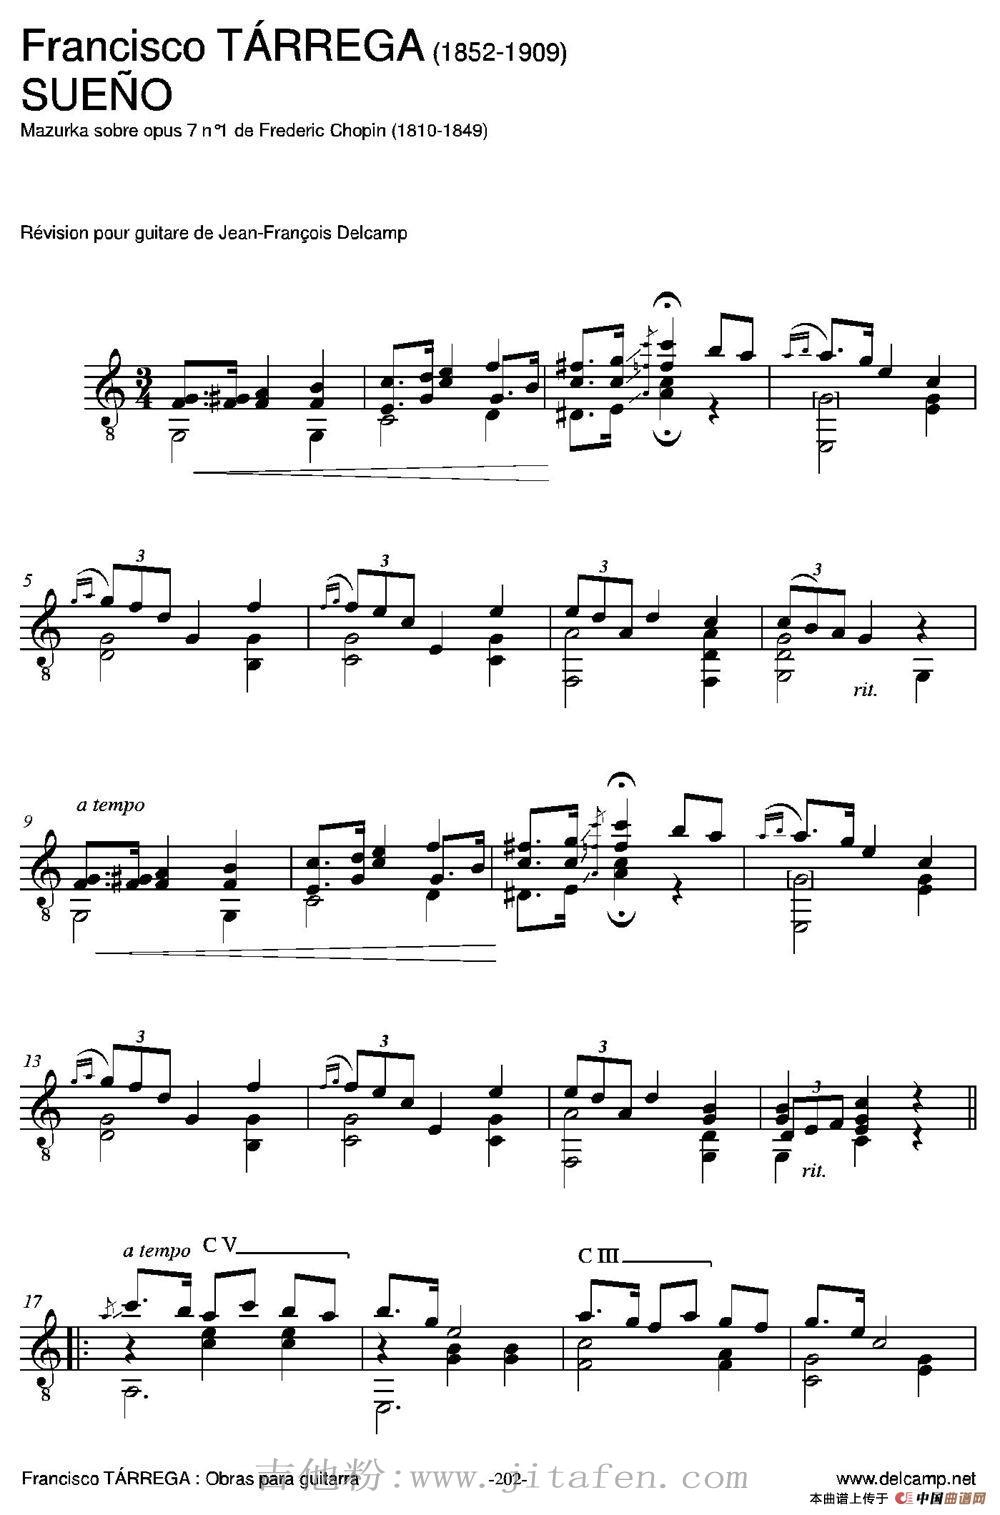 SUENO(Mazurka sobre opus 7 n1 de Frederic Chopin) 吉他谱